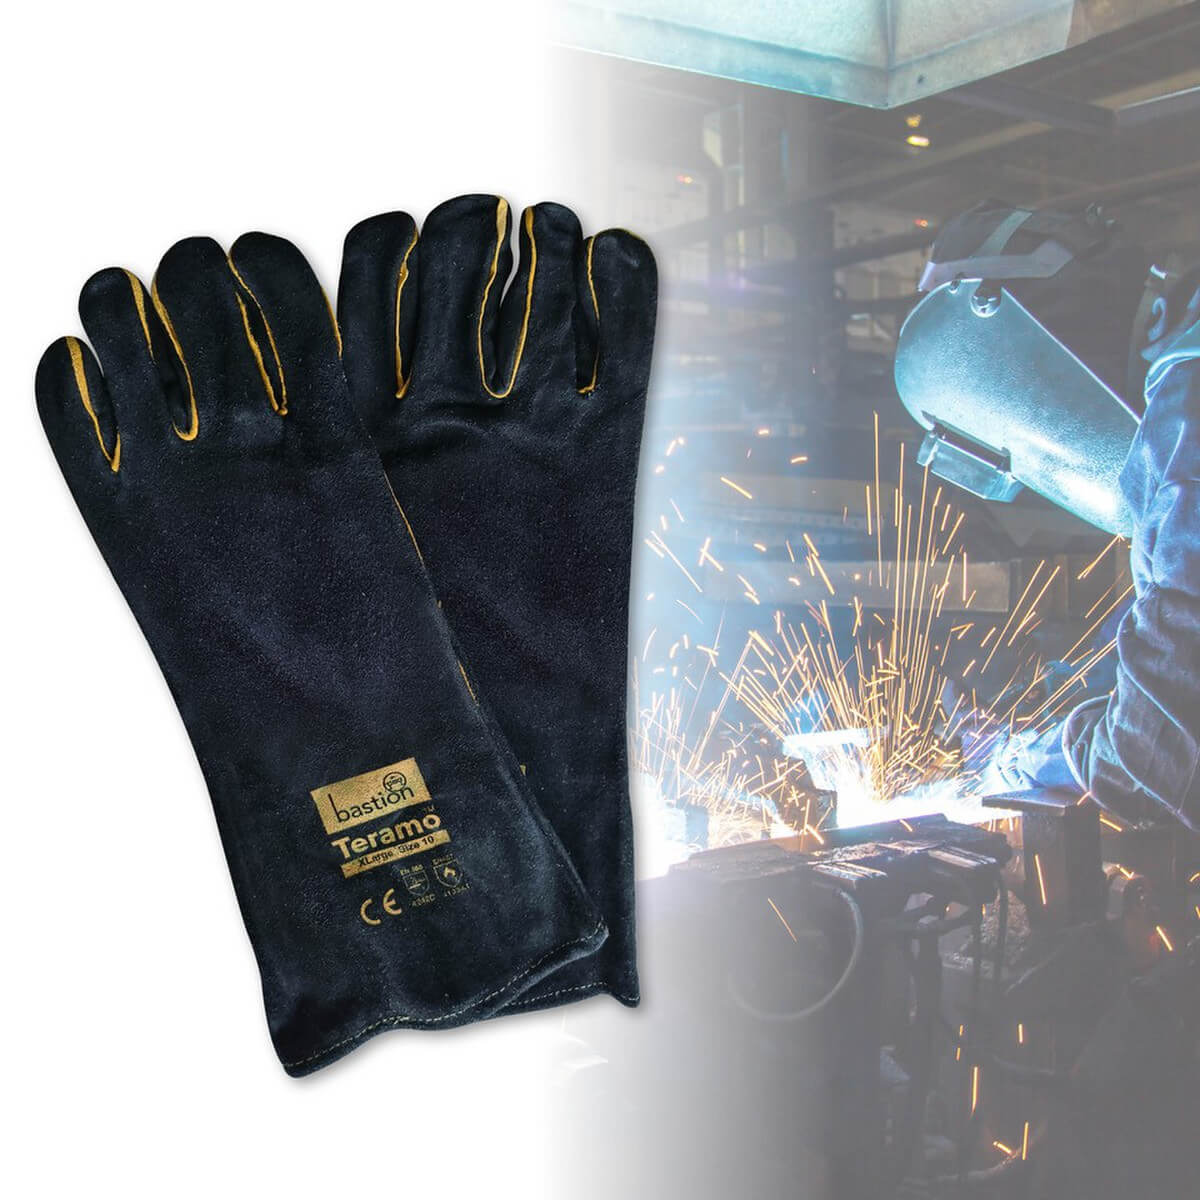 Bastion Teramo Welding Gloves in use